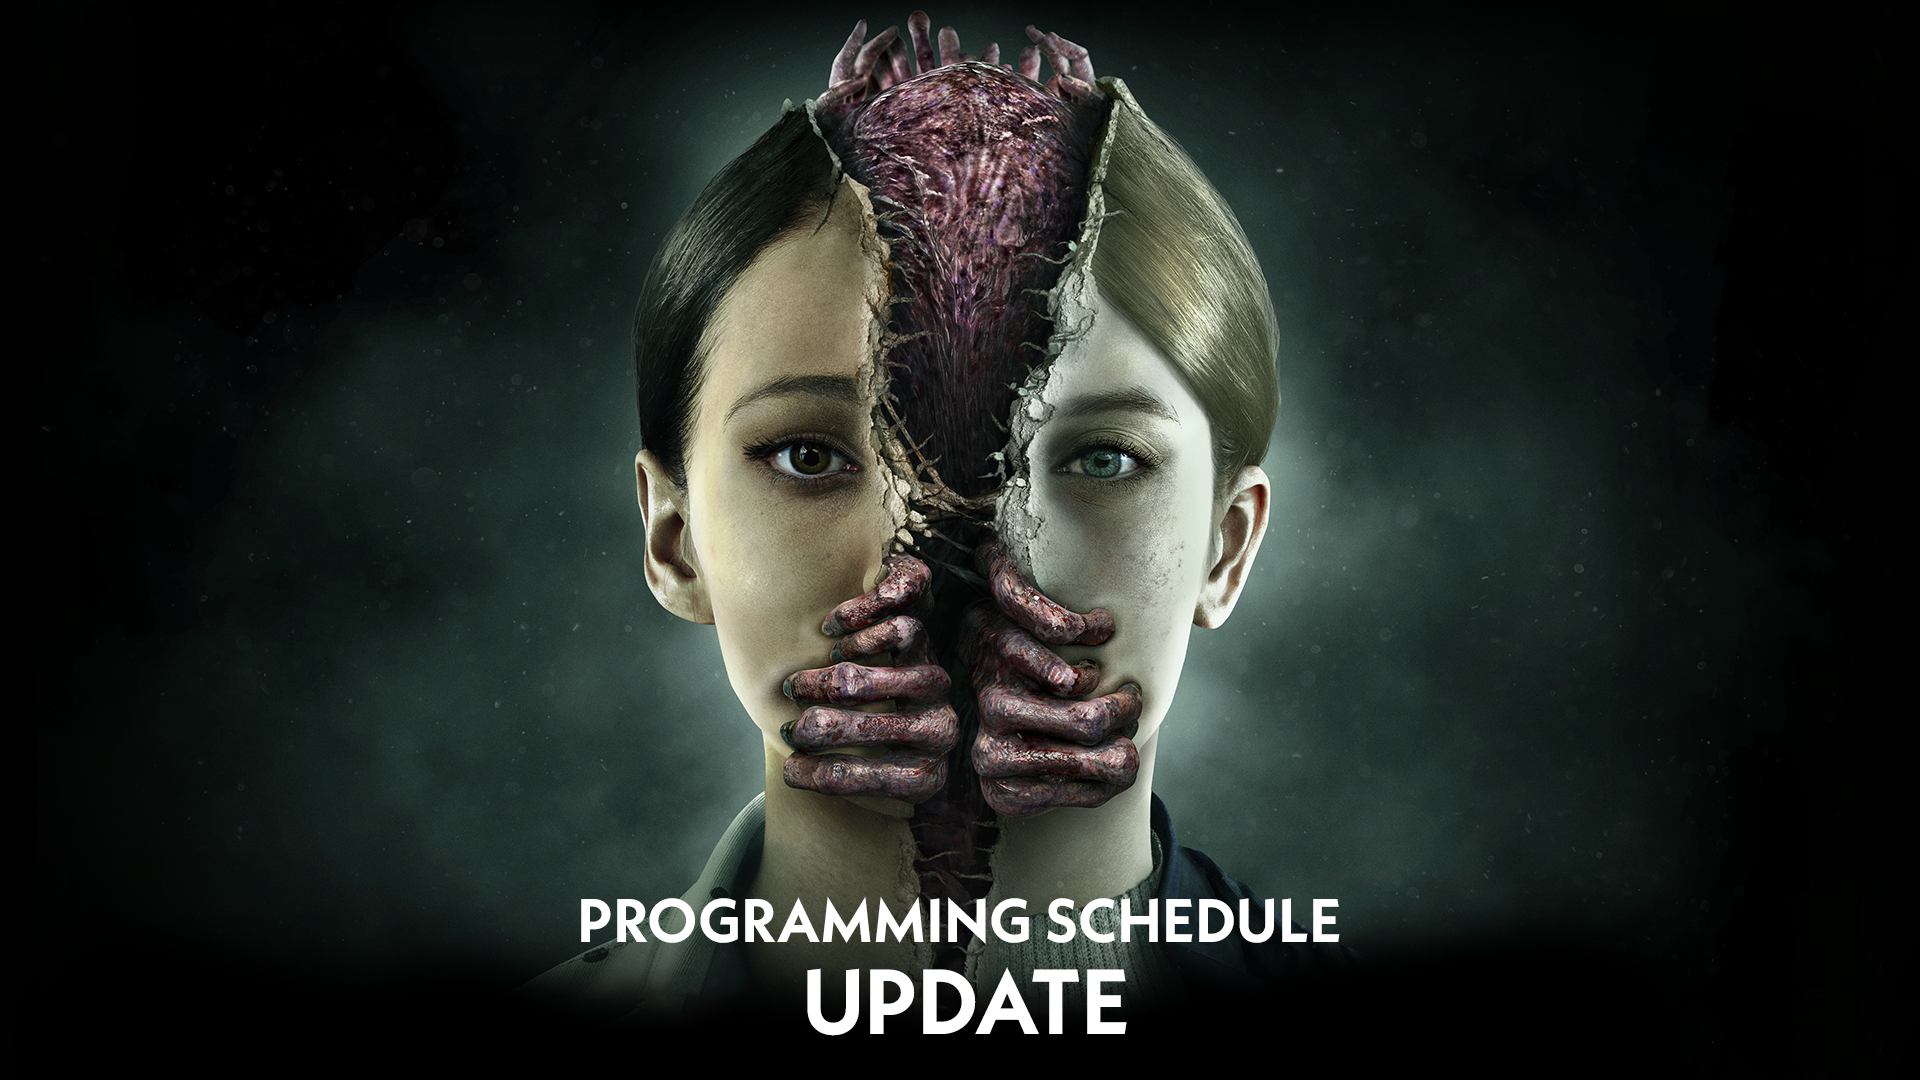 Update to Programming Schedule